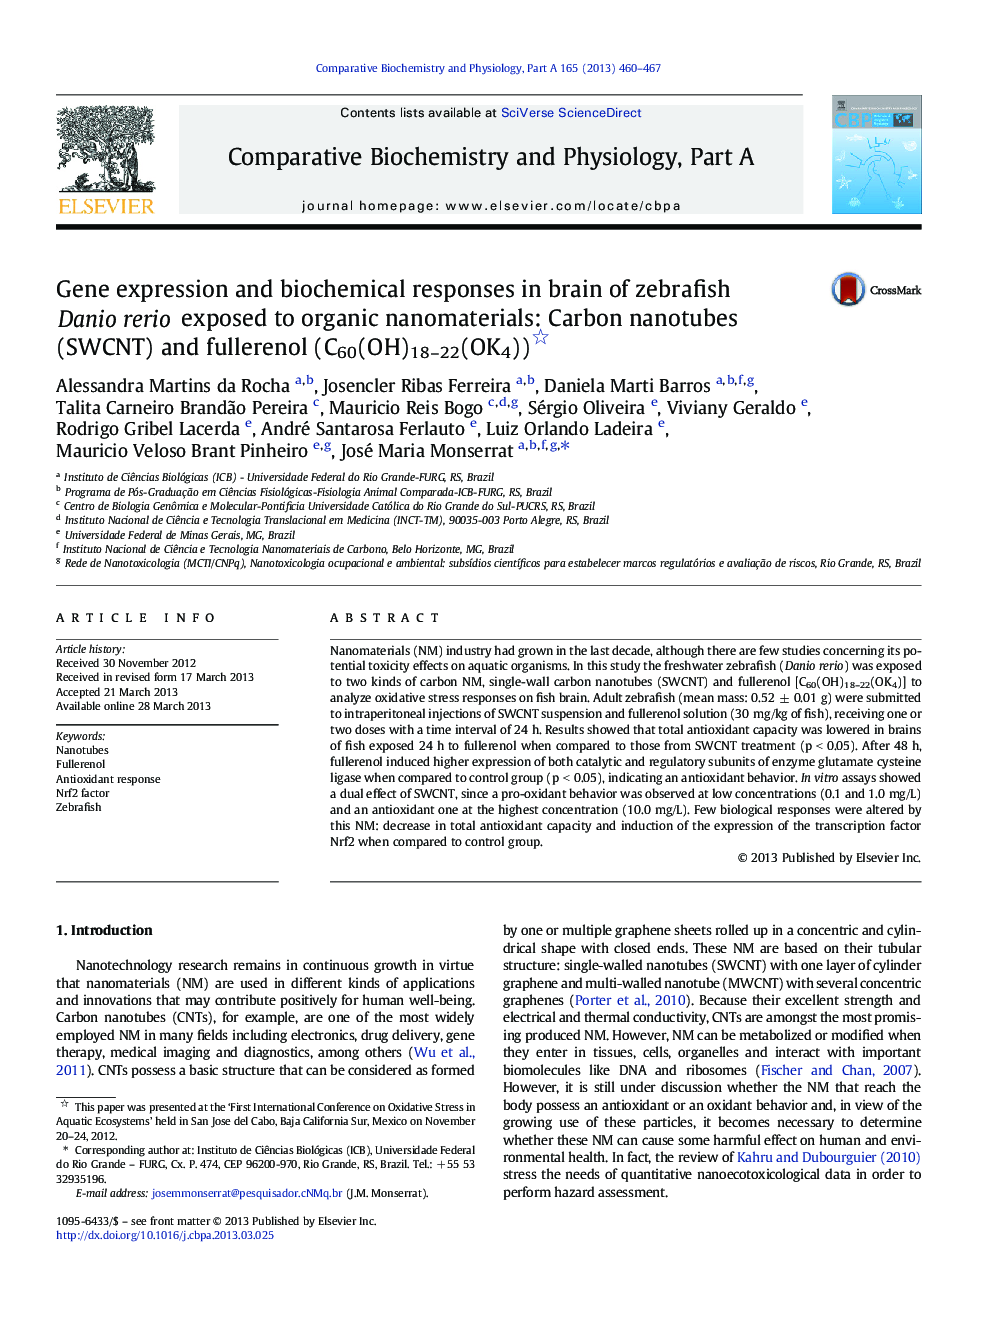 Gene expression and biochemical responses in brain of zebrafish Danio rerio exposed to organic nanomaterials: Carbon nanotubes (SWCNT) and fullerenol (C60(OH)18–22(OK4)) 